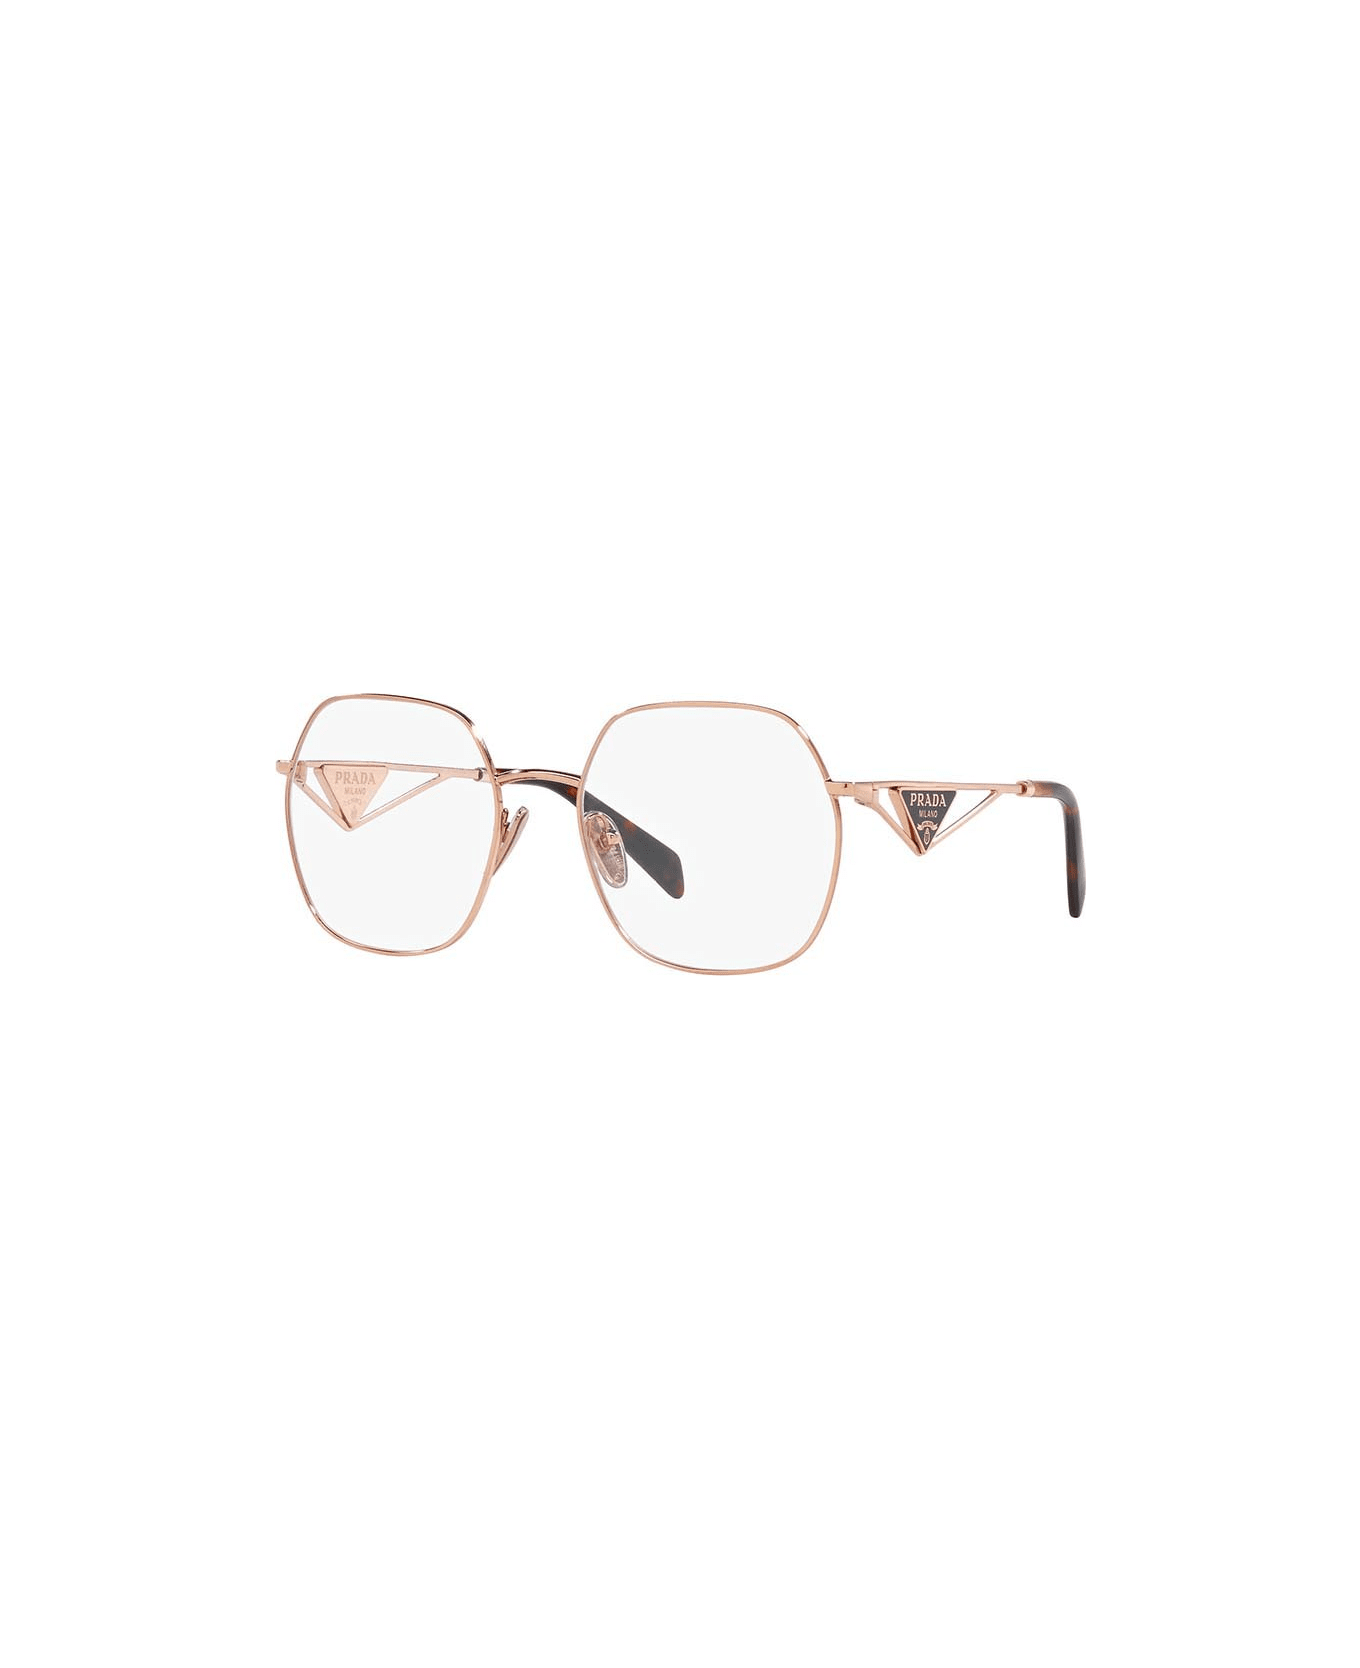 Prada Eyewear Glasses - SVF1O1